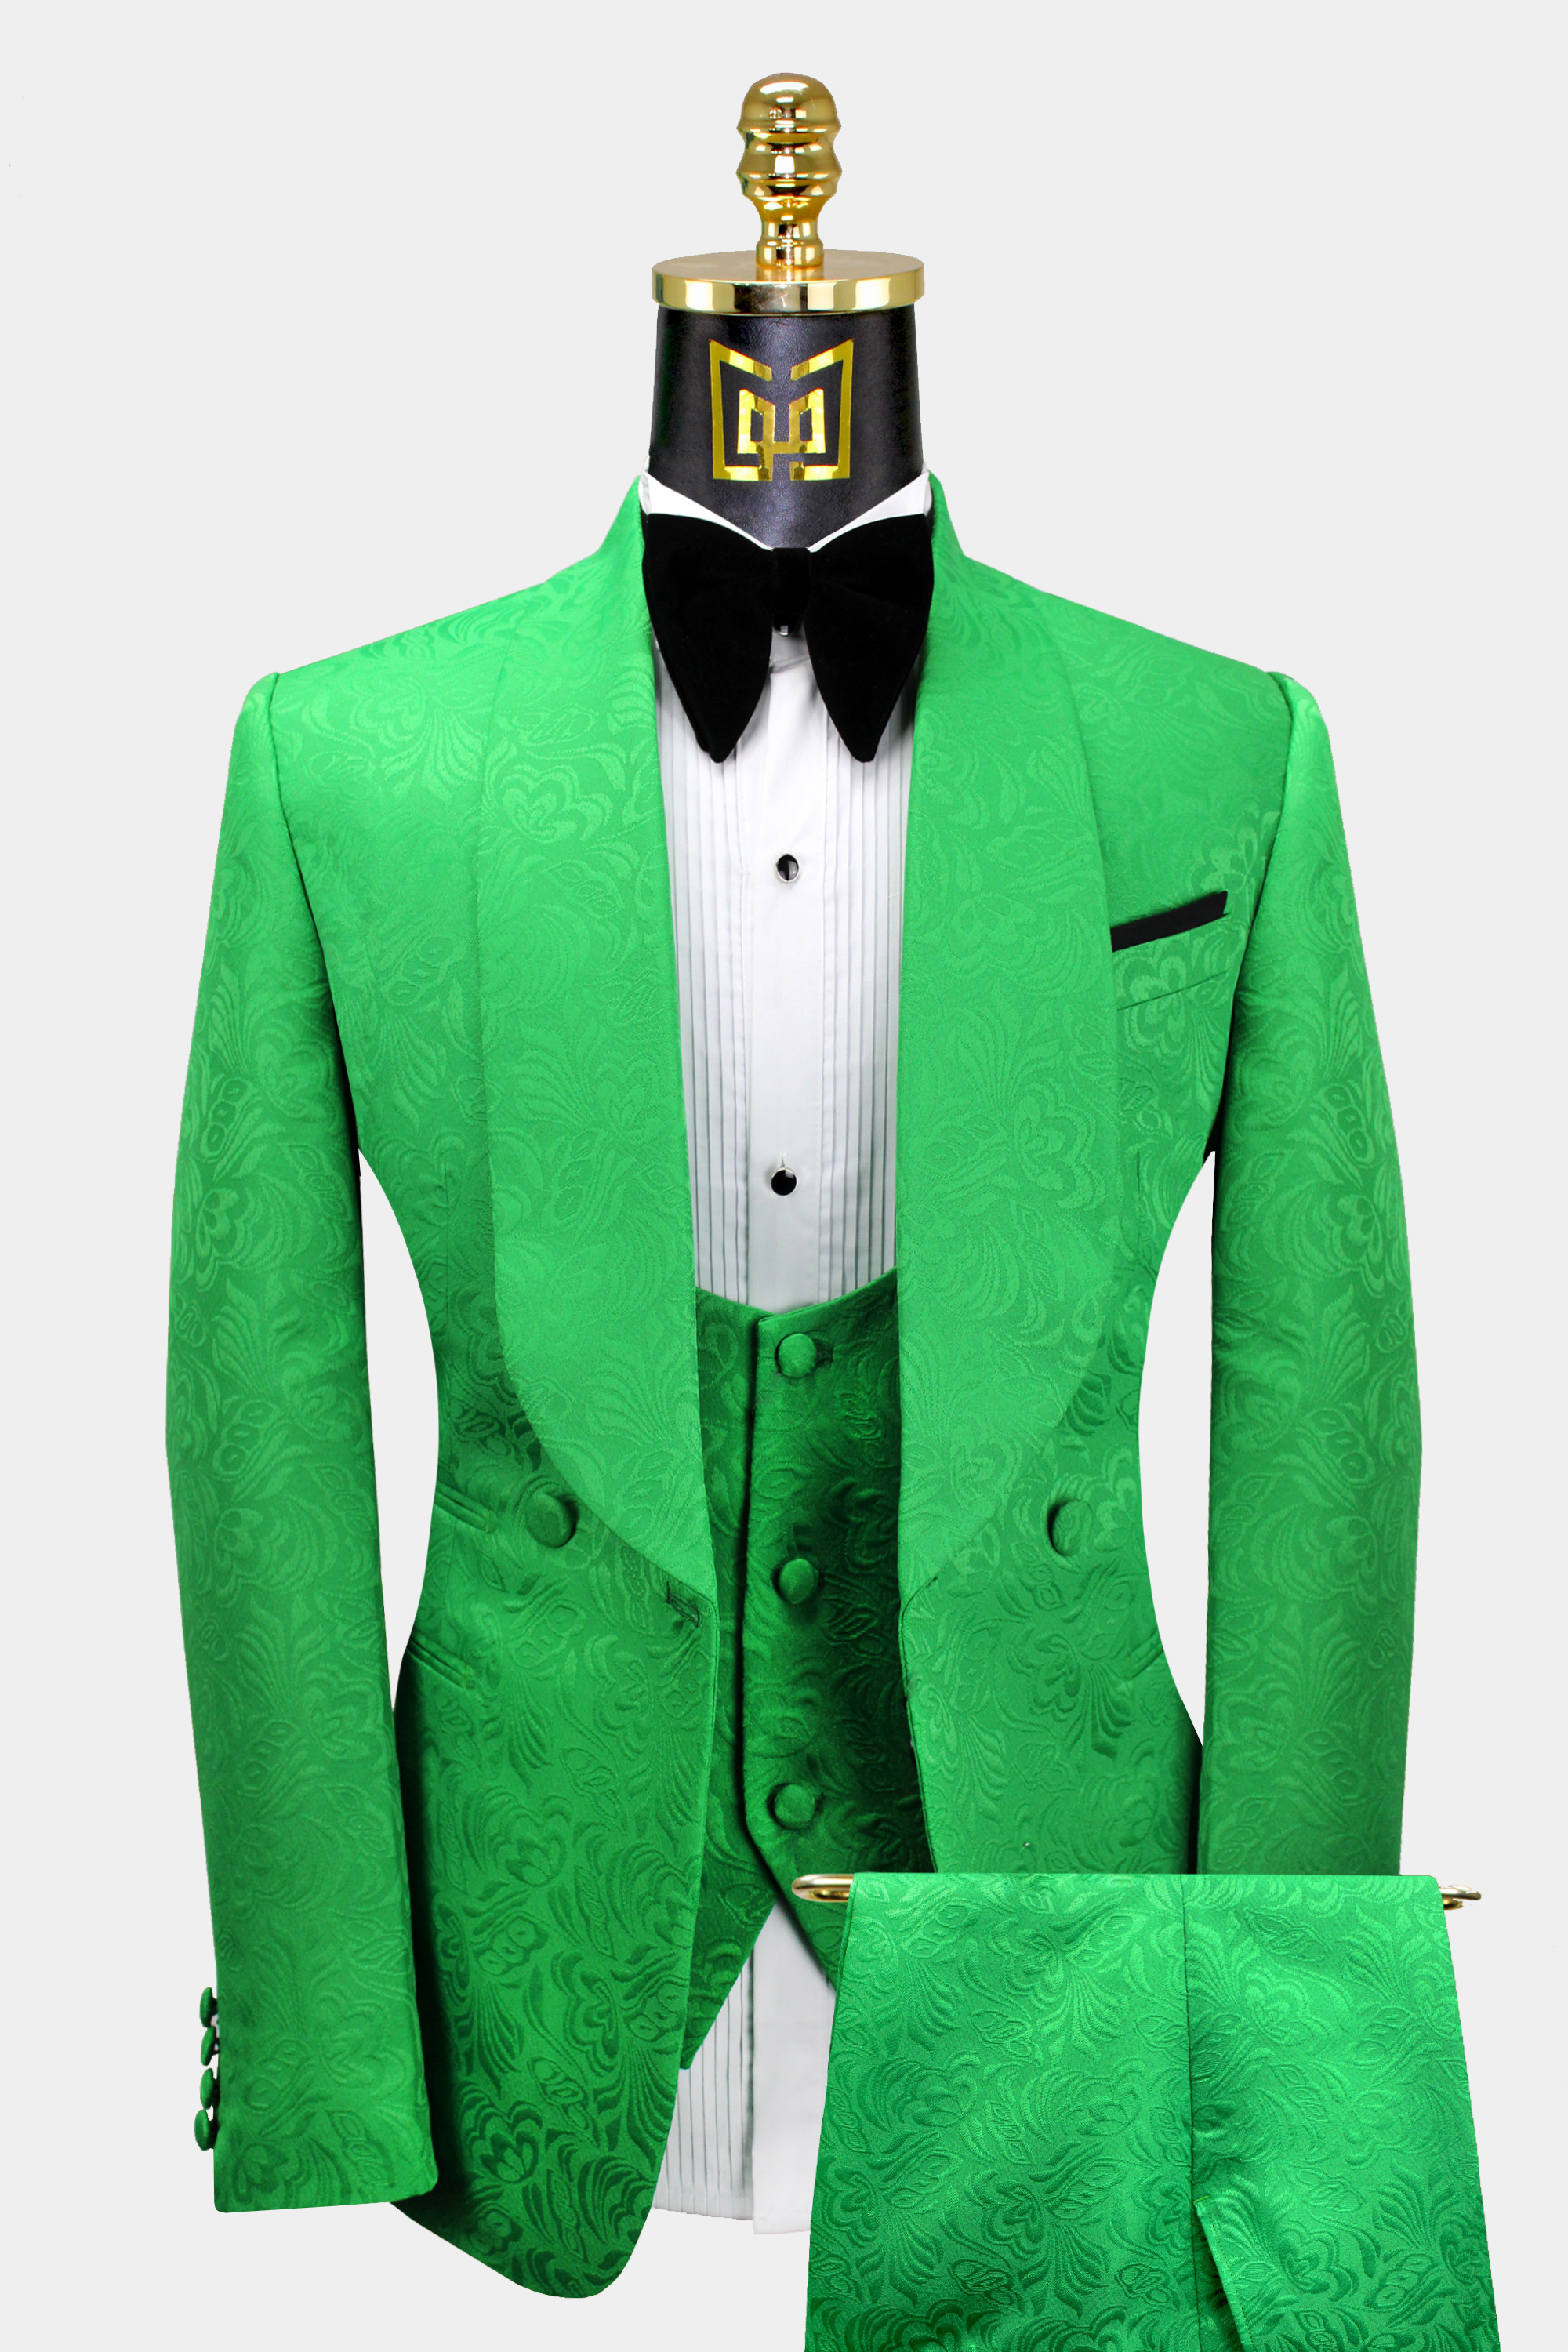 Mens-Double-Breasted-Tuxedo-Floral-Wedidng-Prom-Suit-from-Gentlemansguru.com